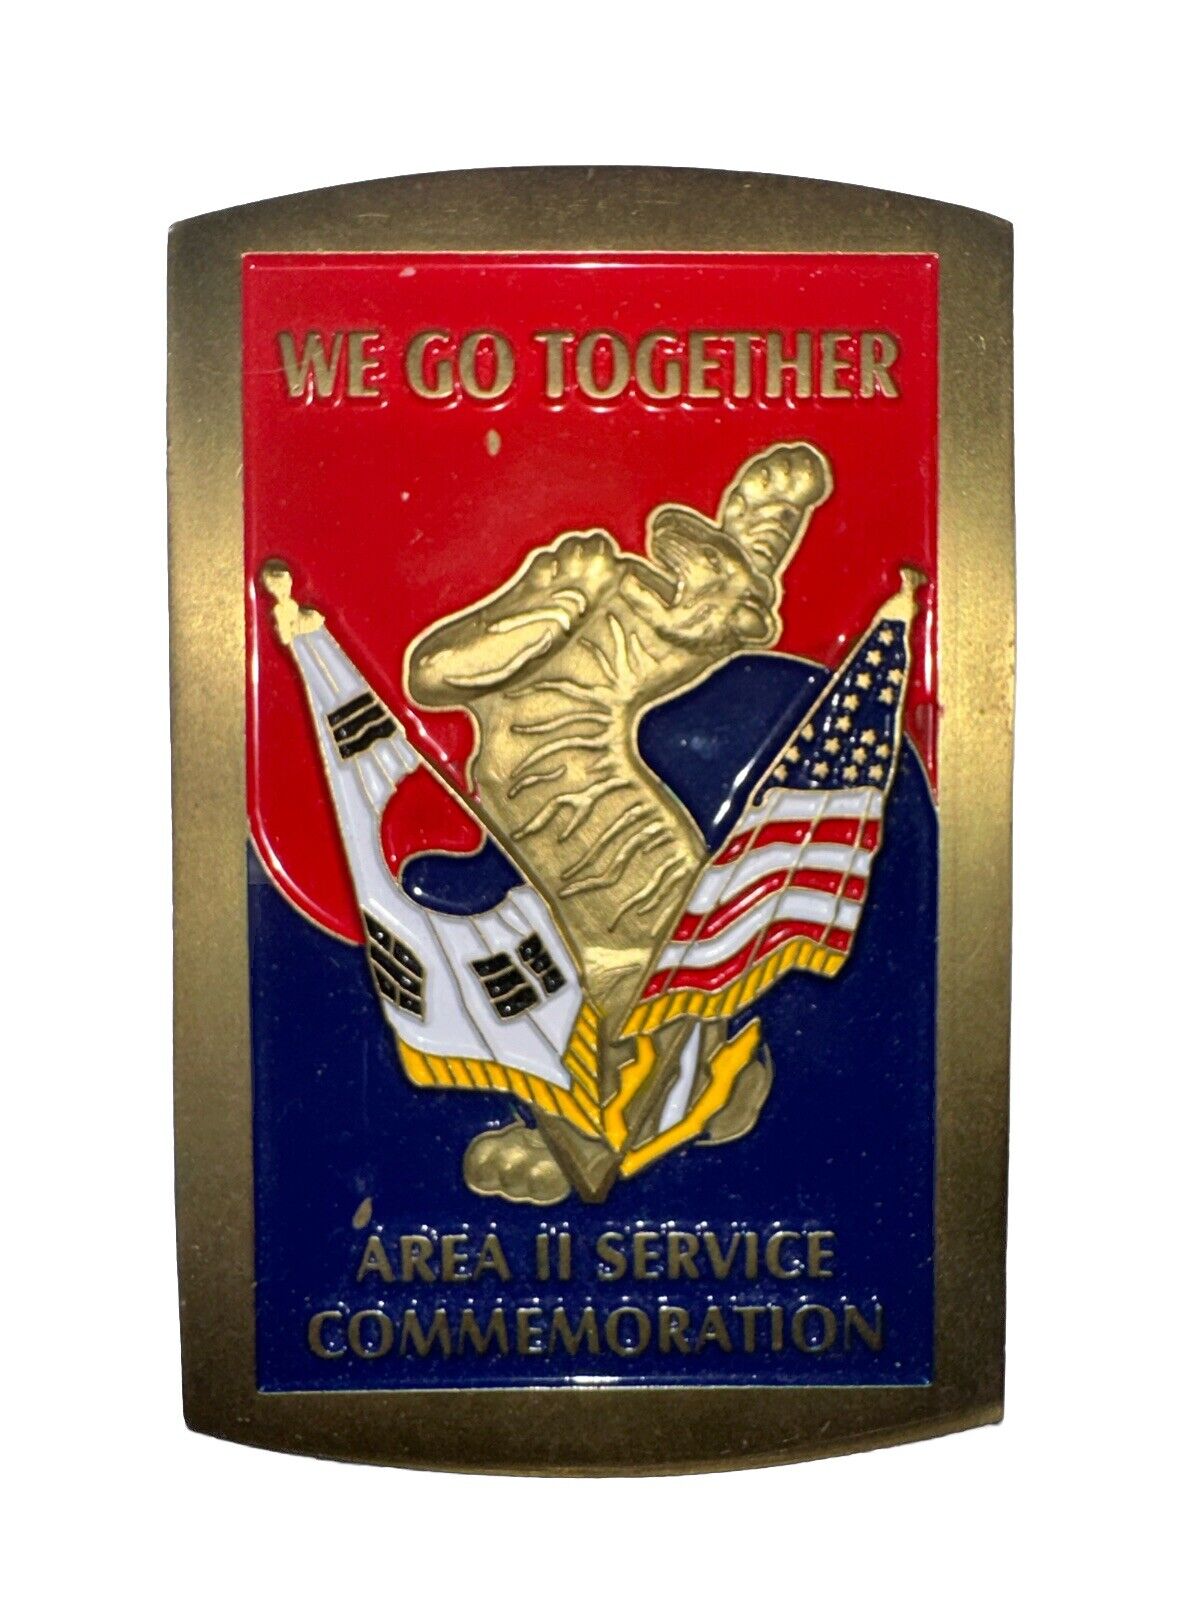 US Army Korea Area II Service Commemoration Challenge Coin Katusa